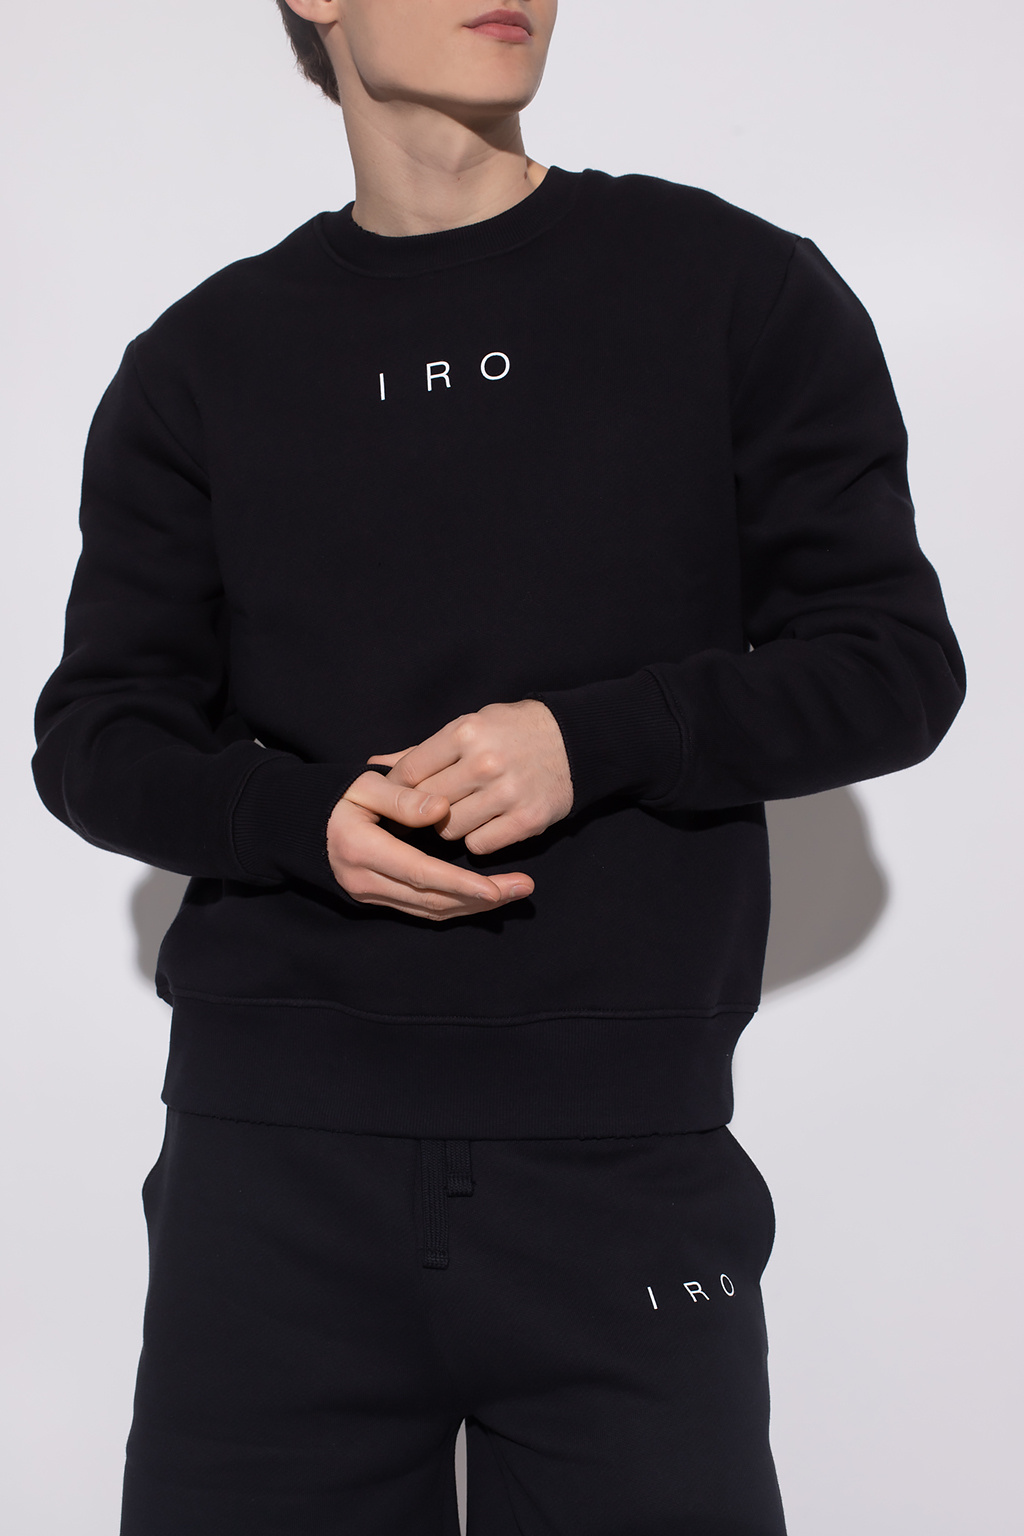 Iro Supreme x Comme des Garçons Shirt x Timberland 6-Inch Premium Waterproof Boot in black